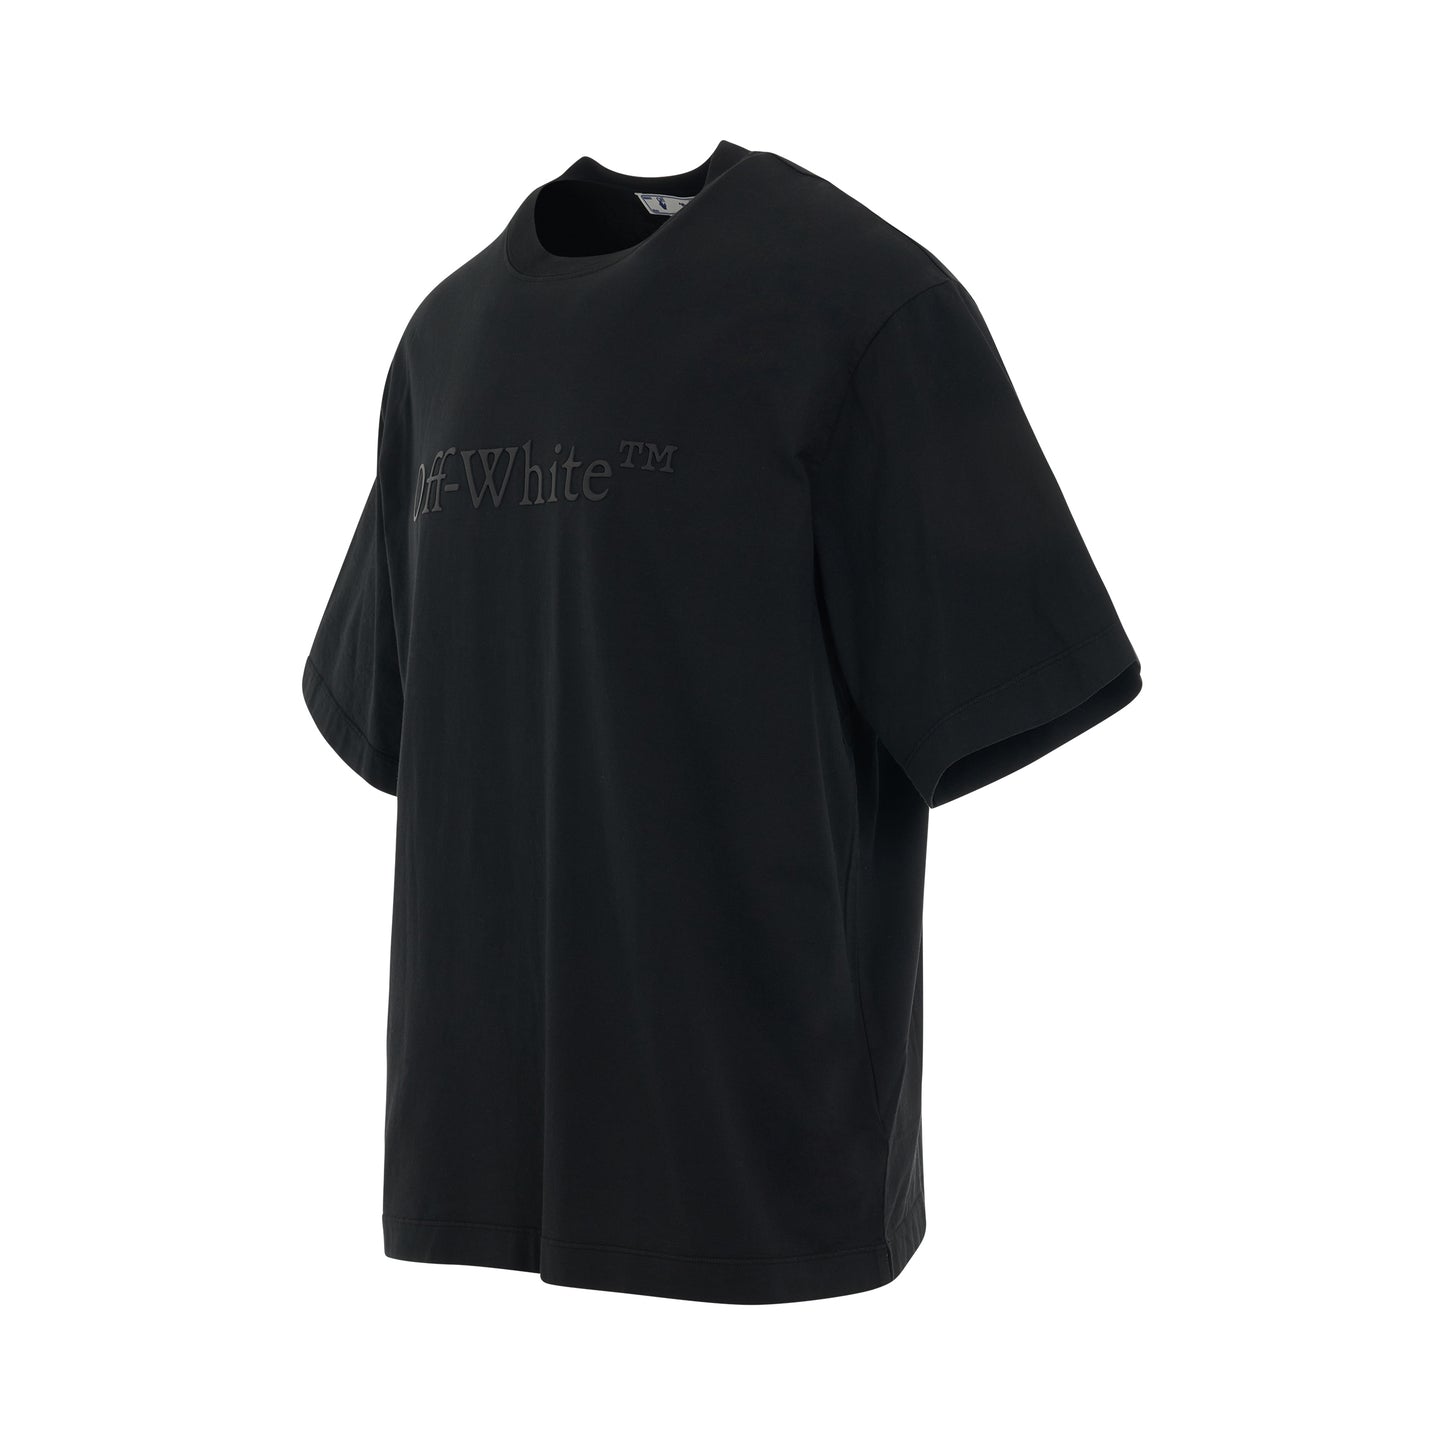 Bookish Laundry Oversized Skate T-Shirt in Black